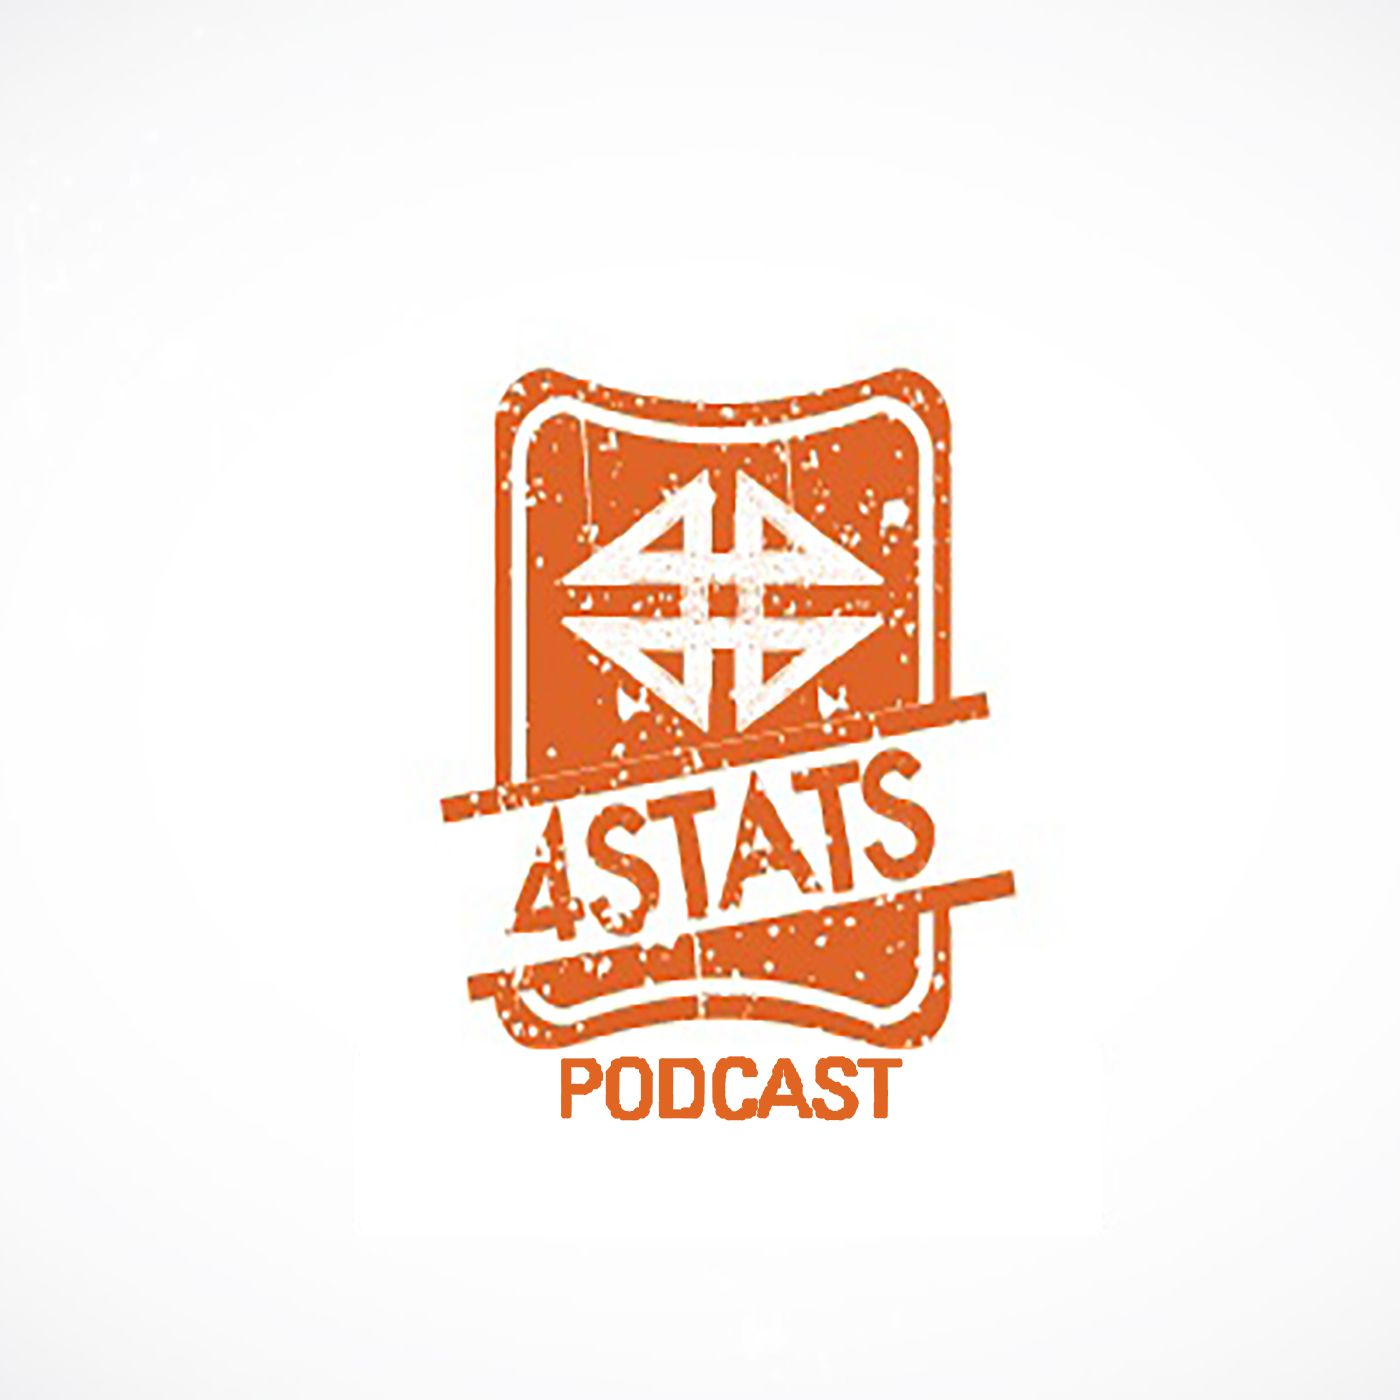 4Stats Podcast